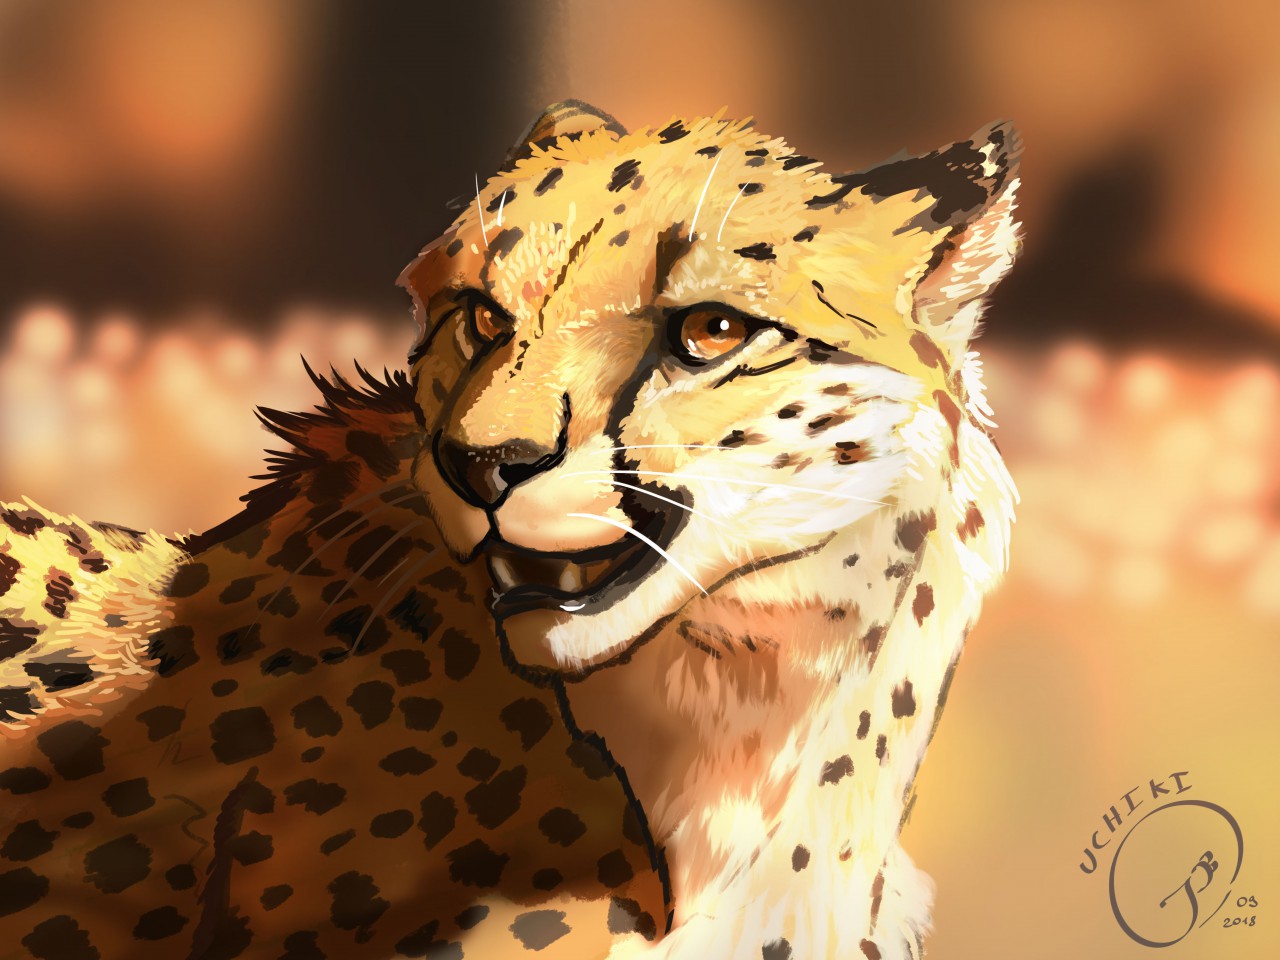 King Cheetah in her sunday best : r/KemonoFriends